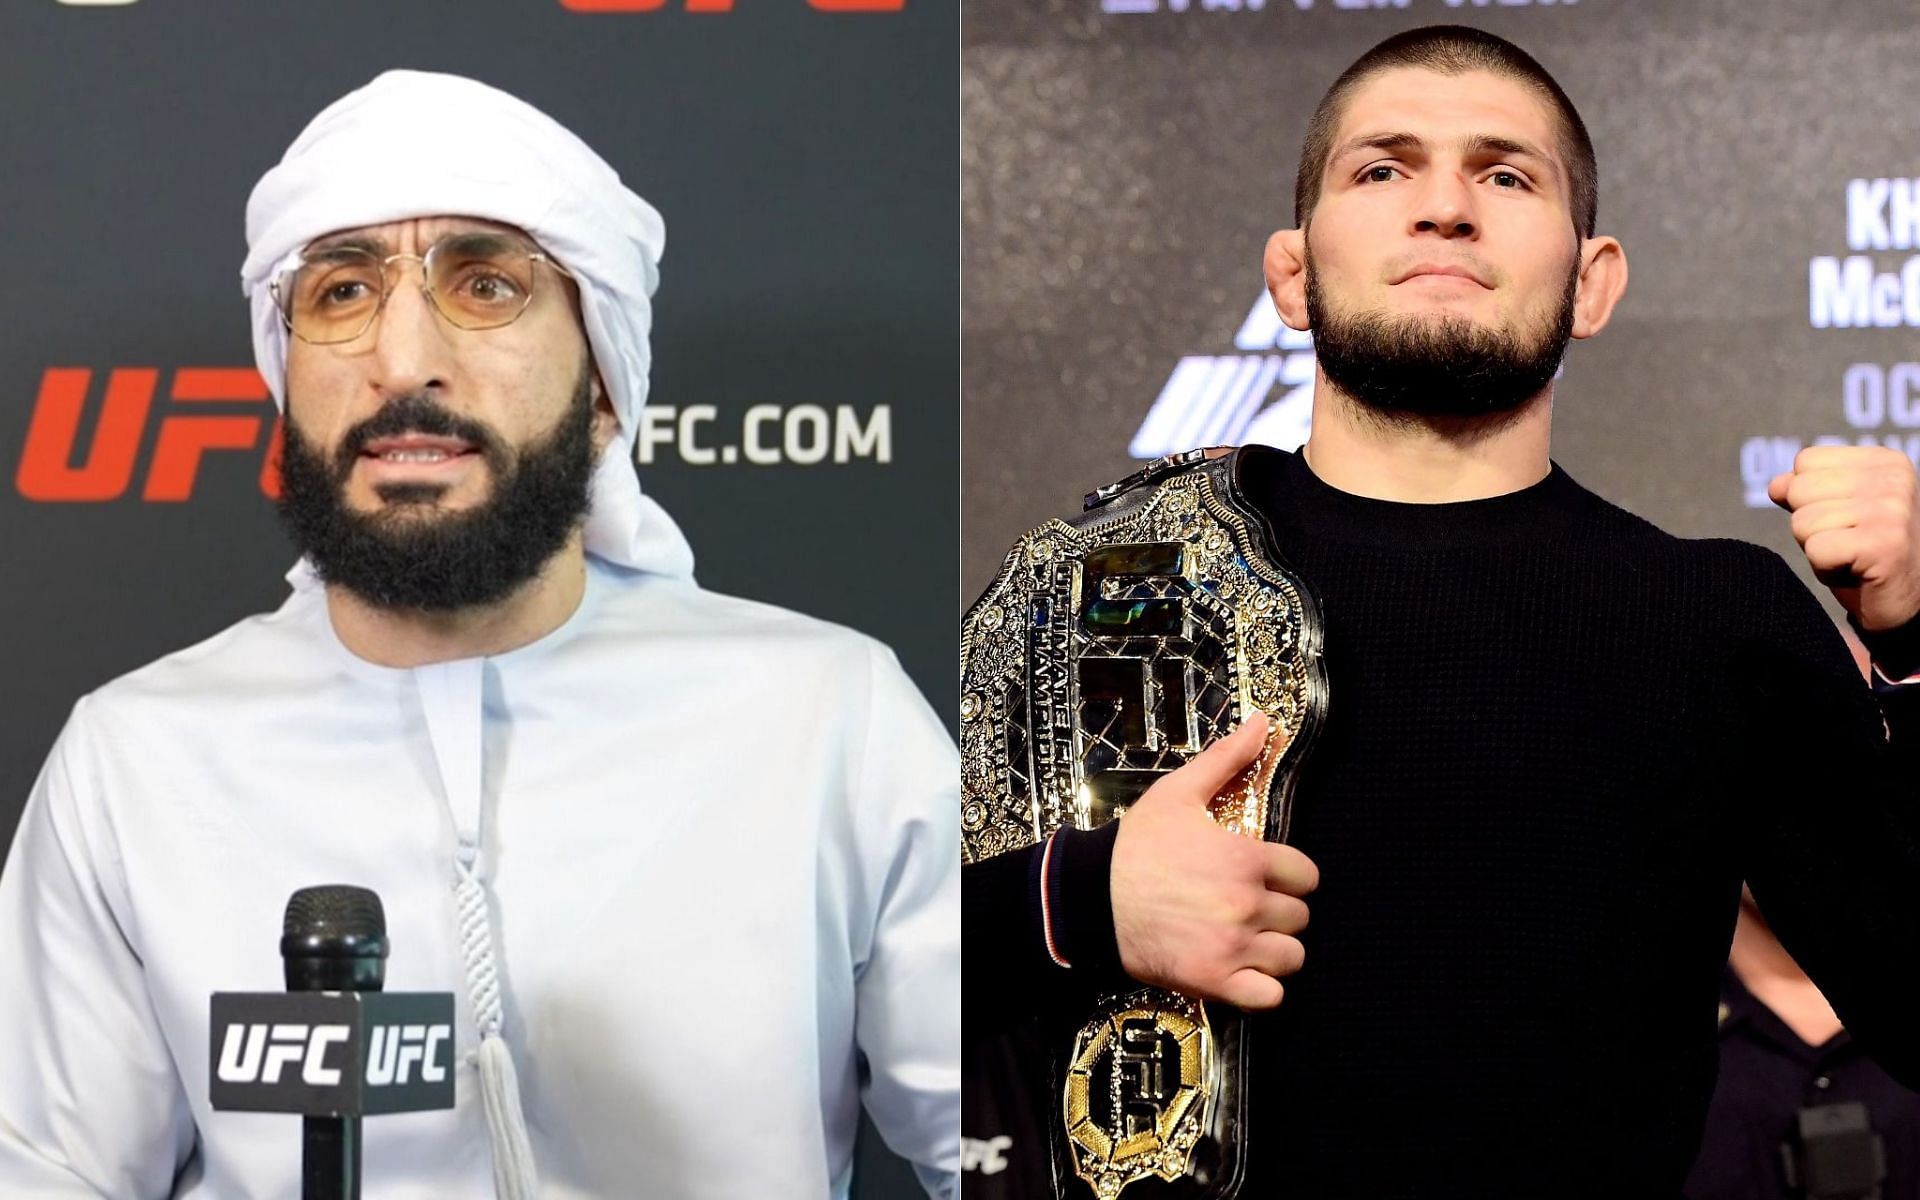 Belal Muhammad (left), Khabib Nurmagomedov (right) [Image Credit: UFC.com and Getty Images]